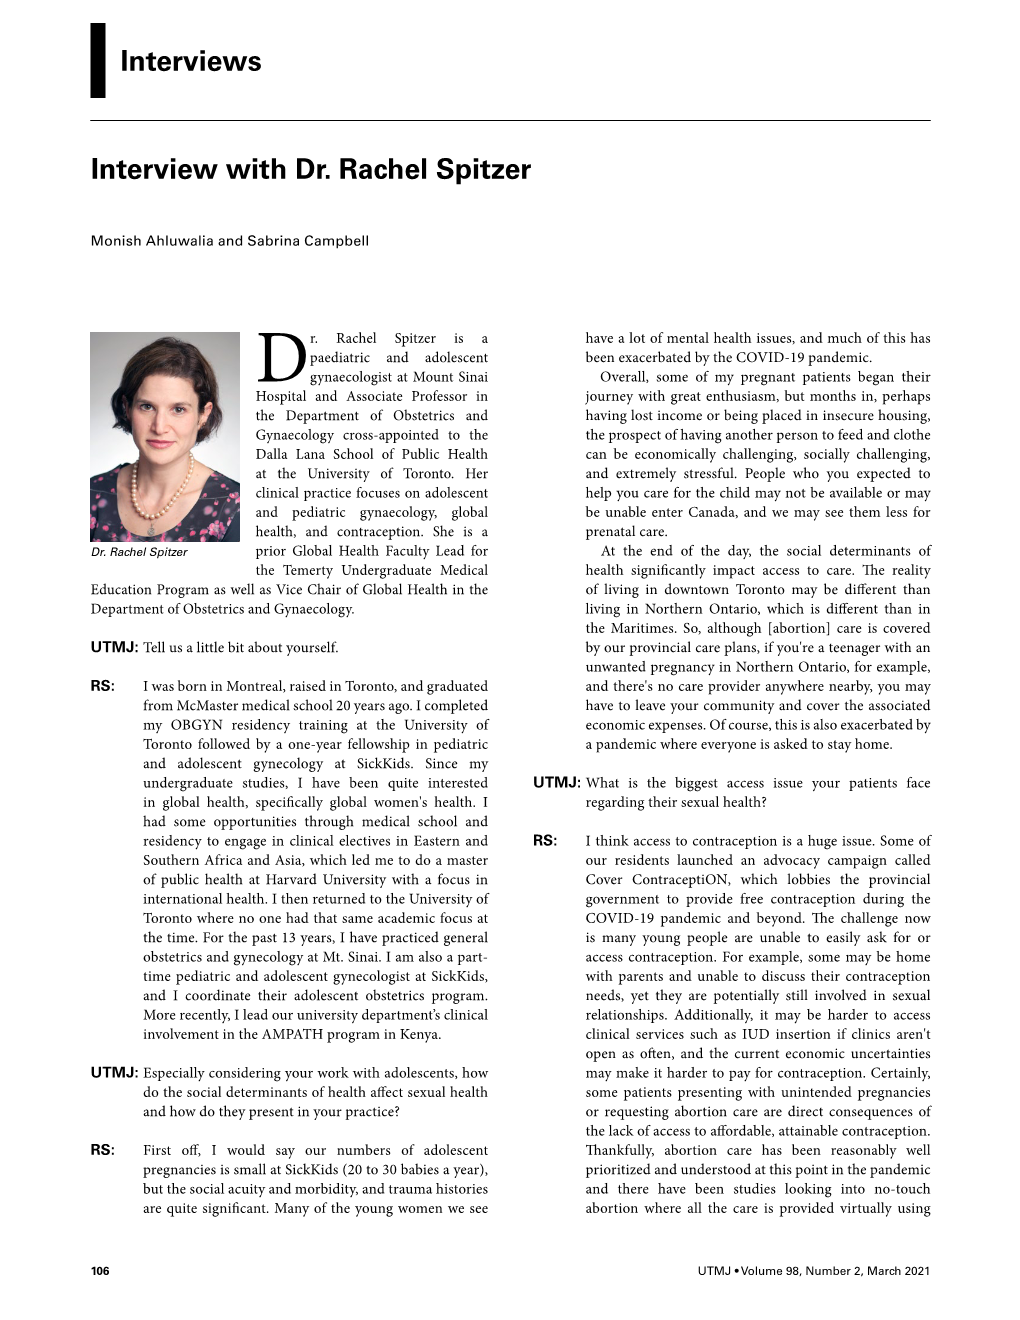 Interviews Interview with Dr. Rachel Spitzer